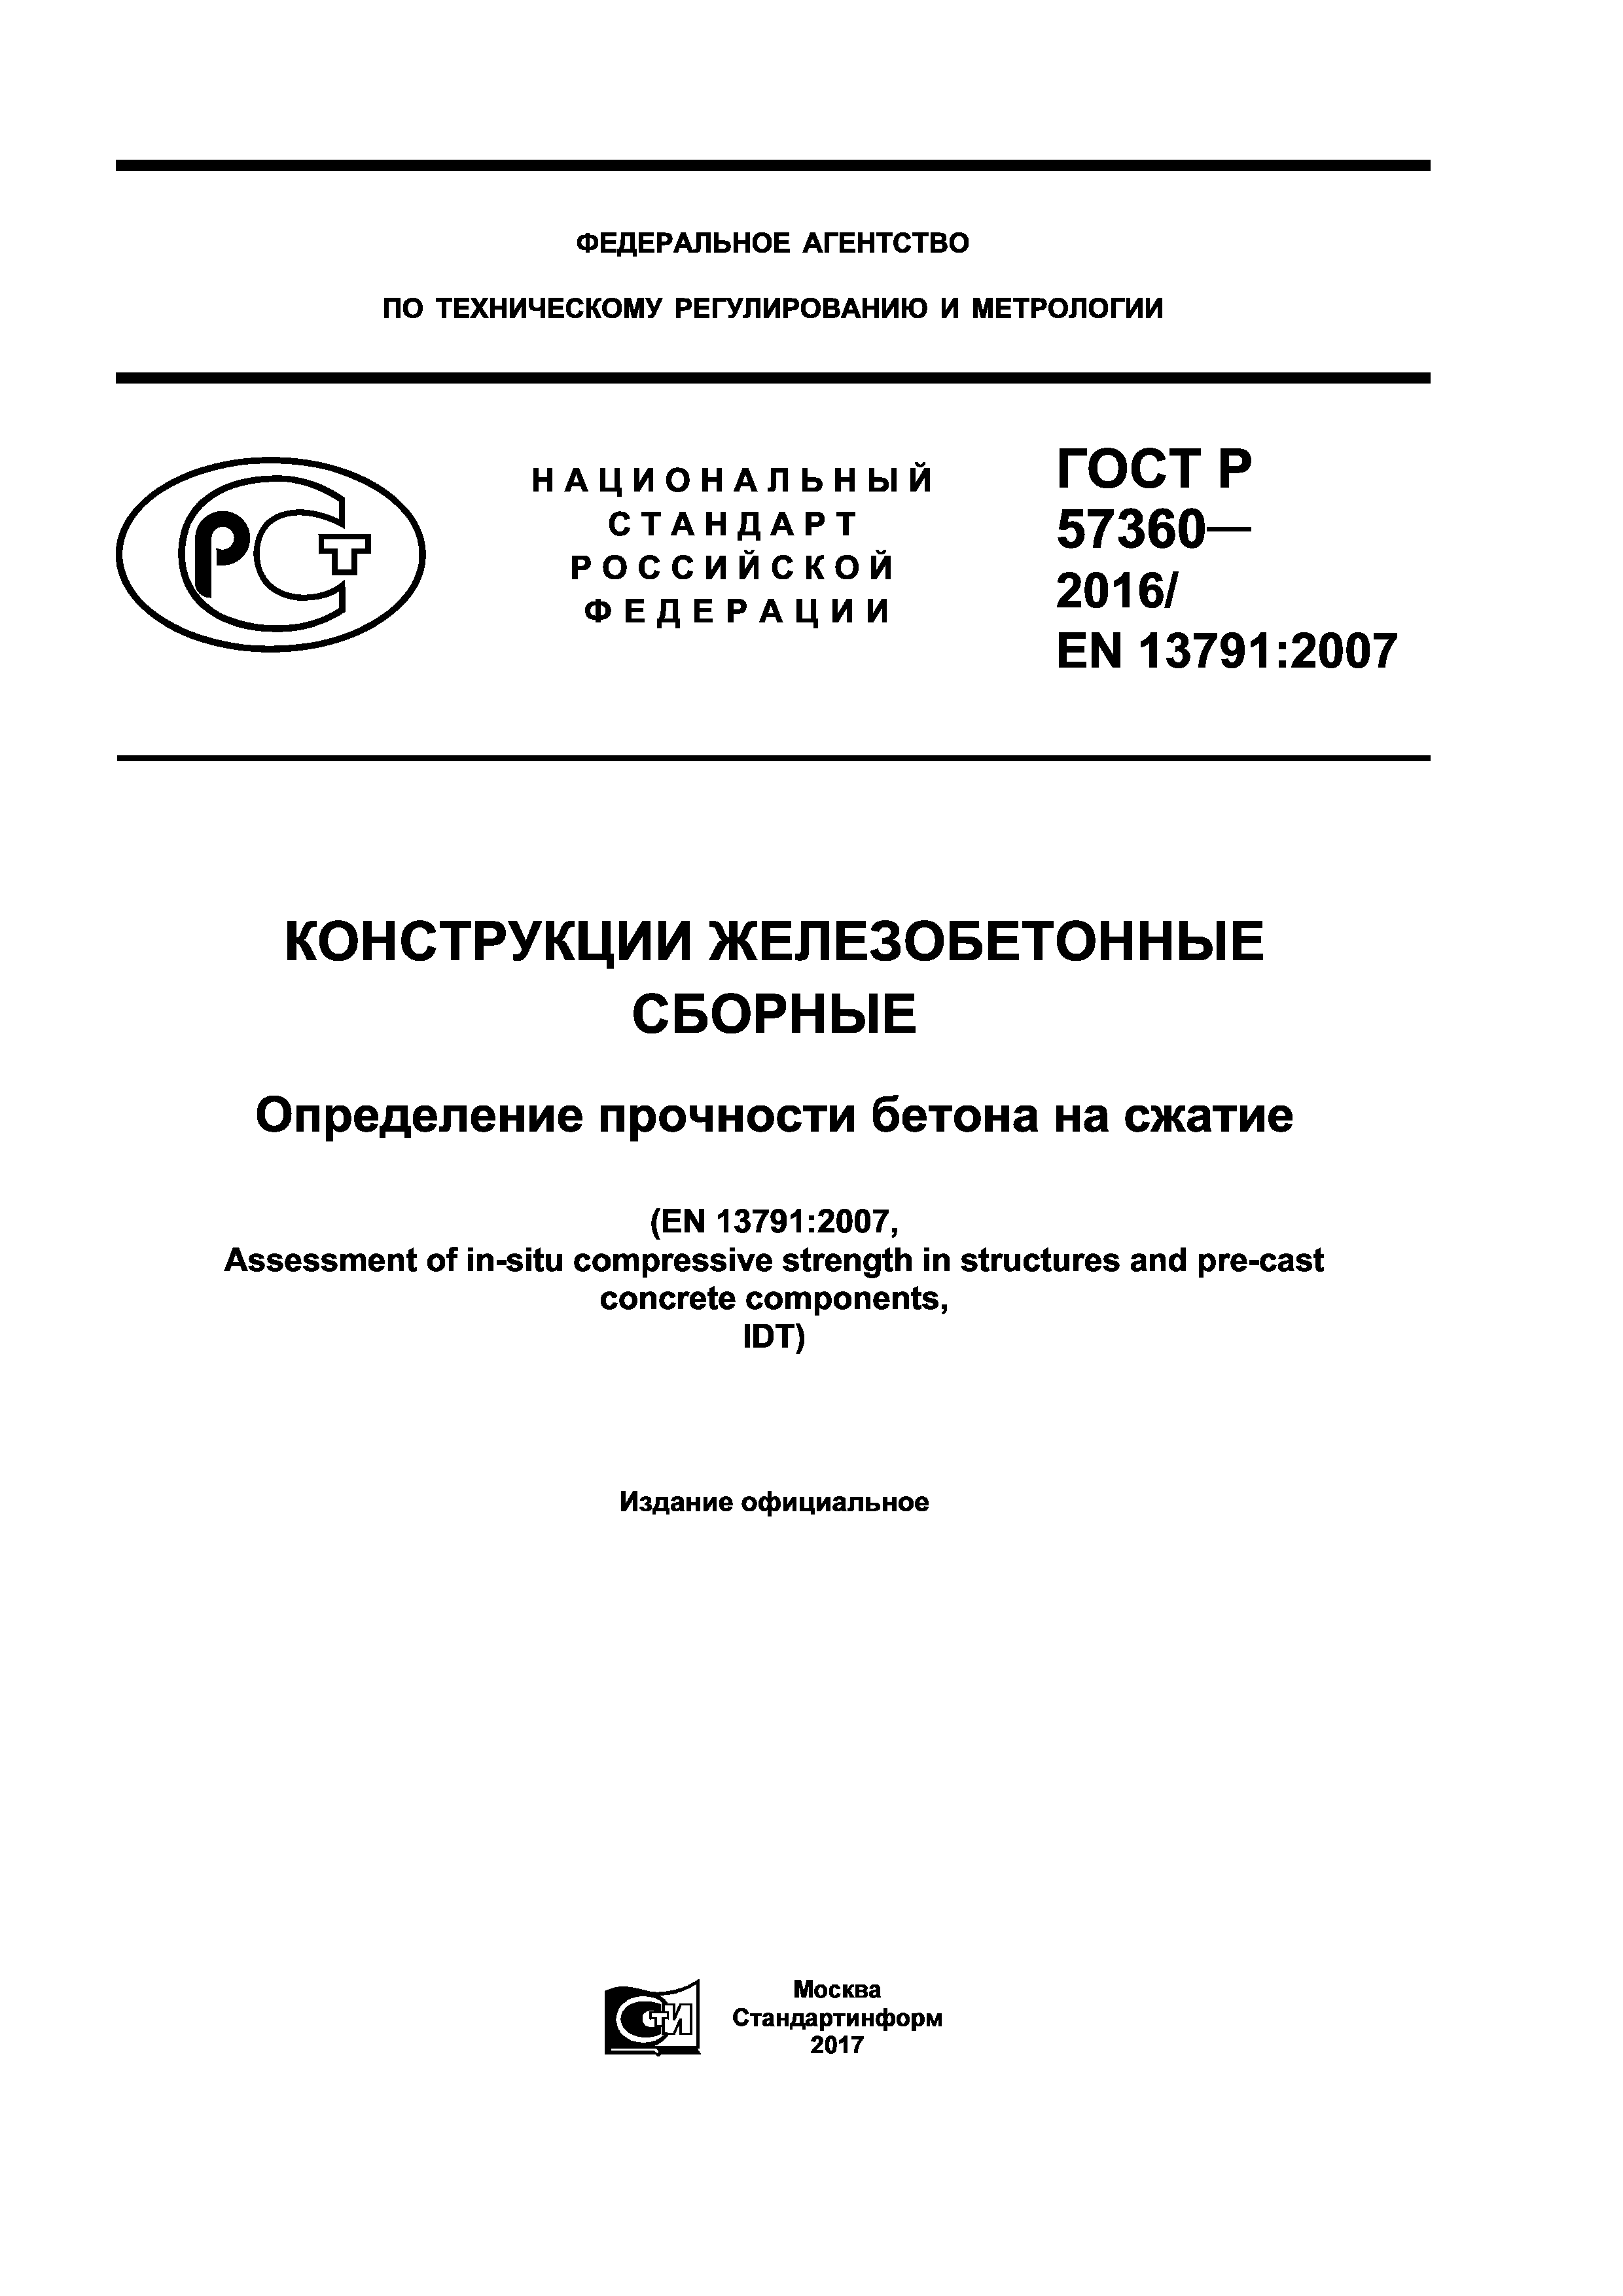 ГОСТ Р 57360-2016